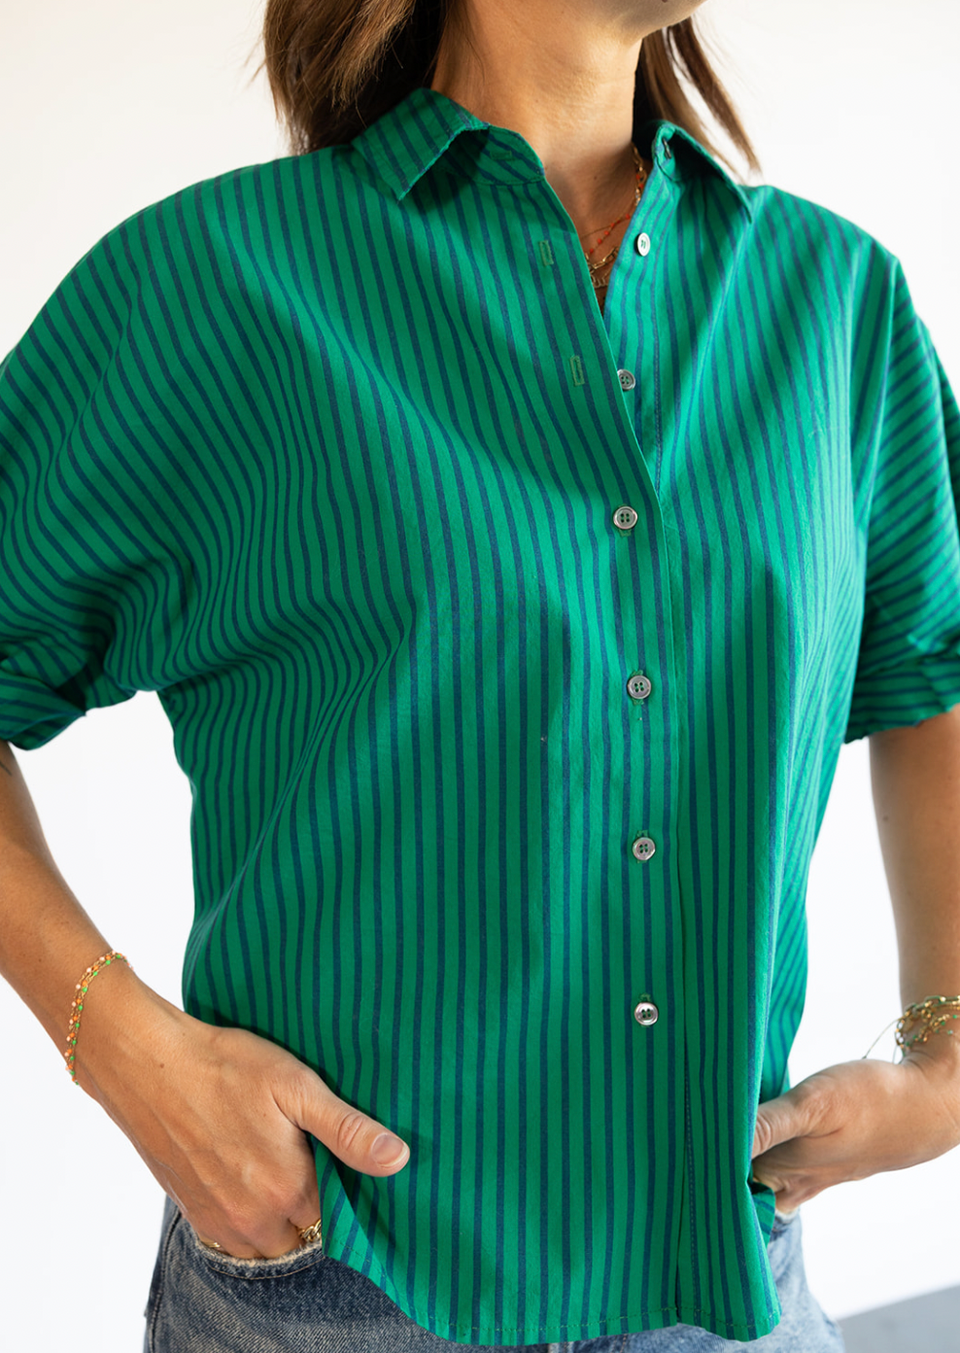 The Xírena Teddy Shirt in Pine Blue